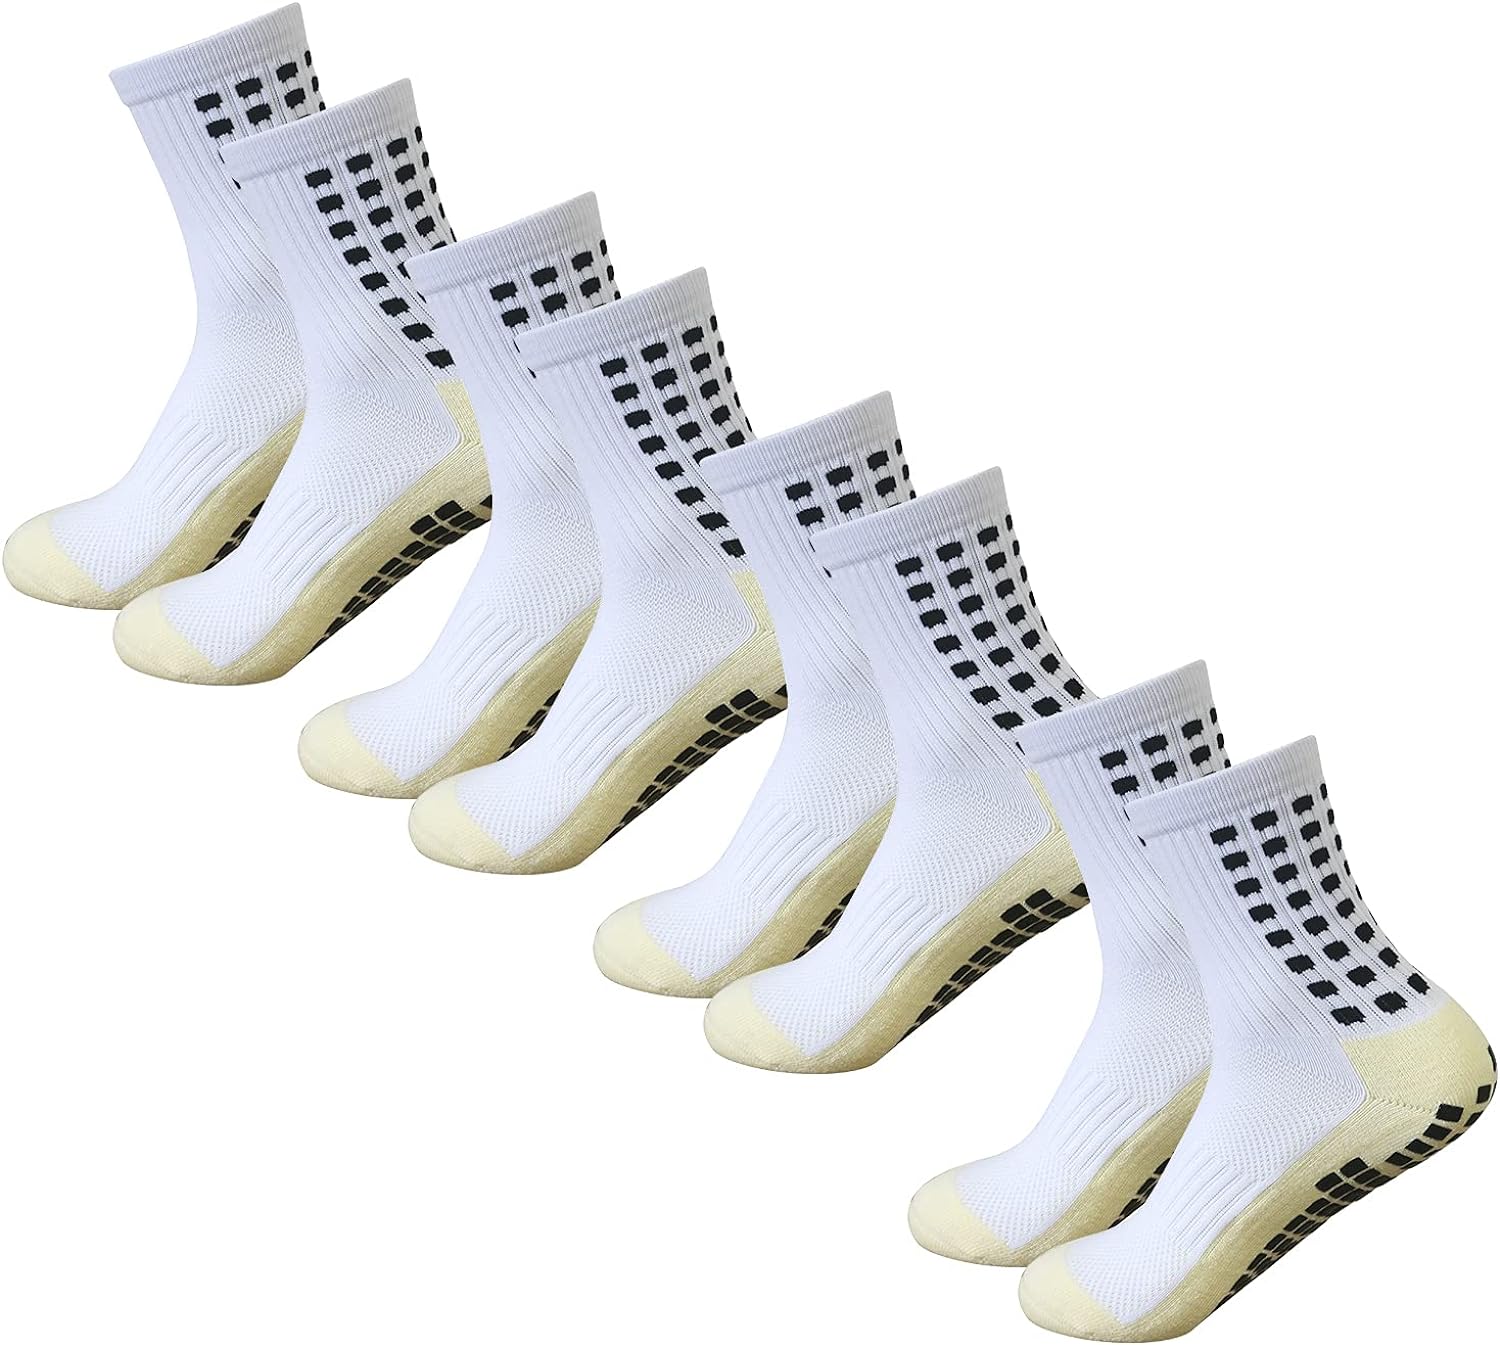 Football Socks Anti Slip Non Slip Grip Outdoor Sports Soccer Socks Multi-color 